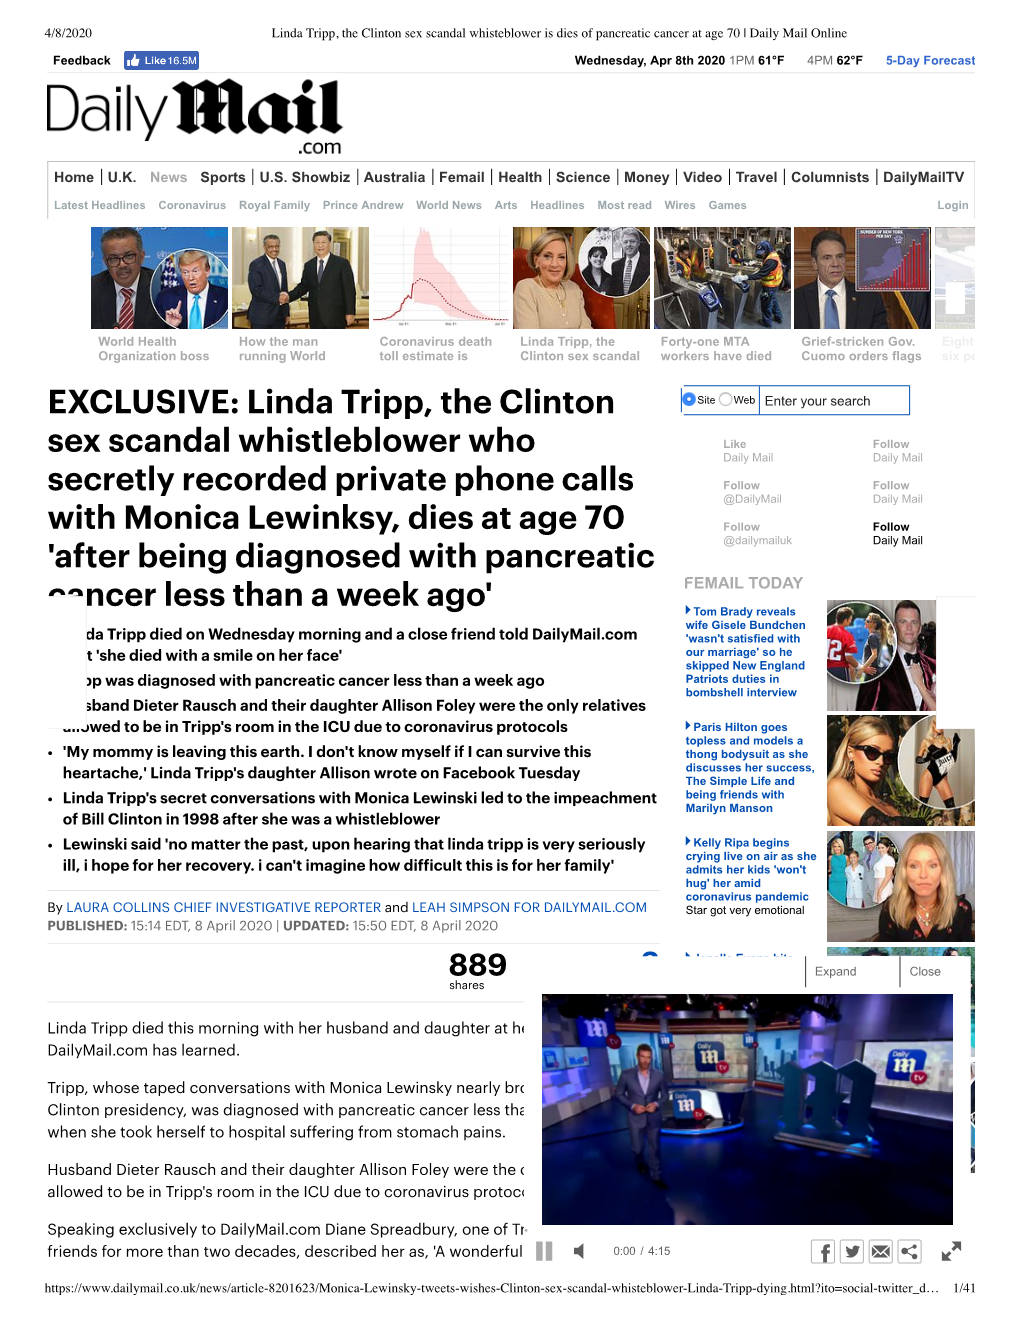 Linda Tripp, the Clinton Sex Scandal Whistleblower Who